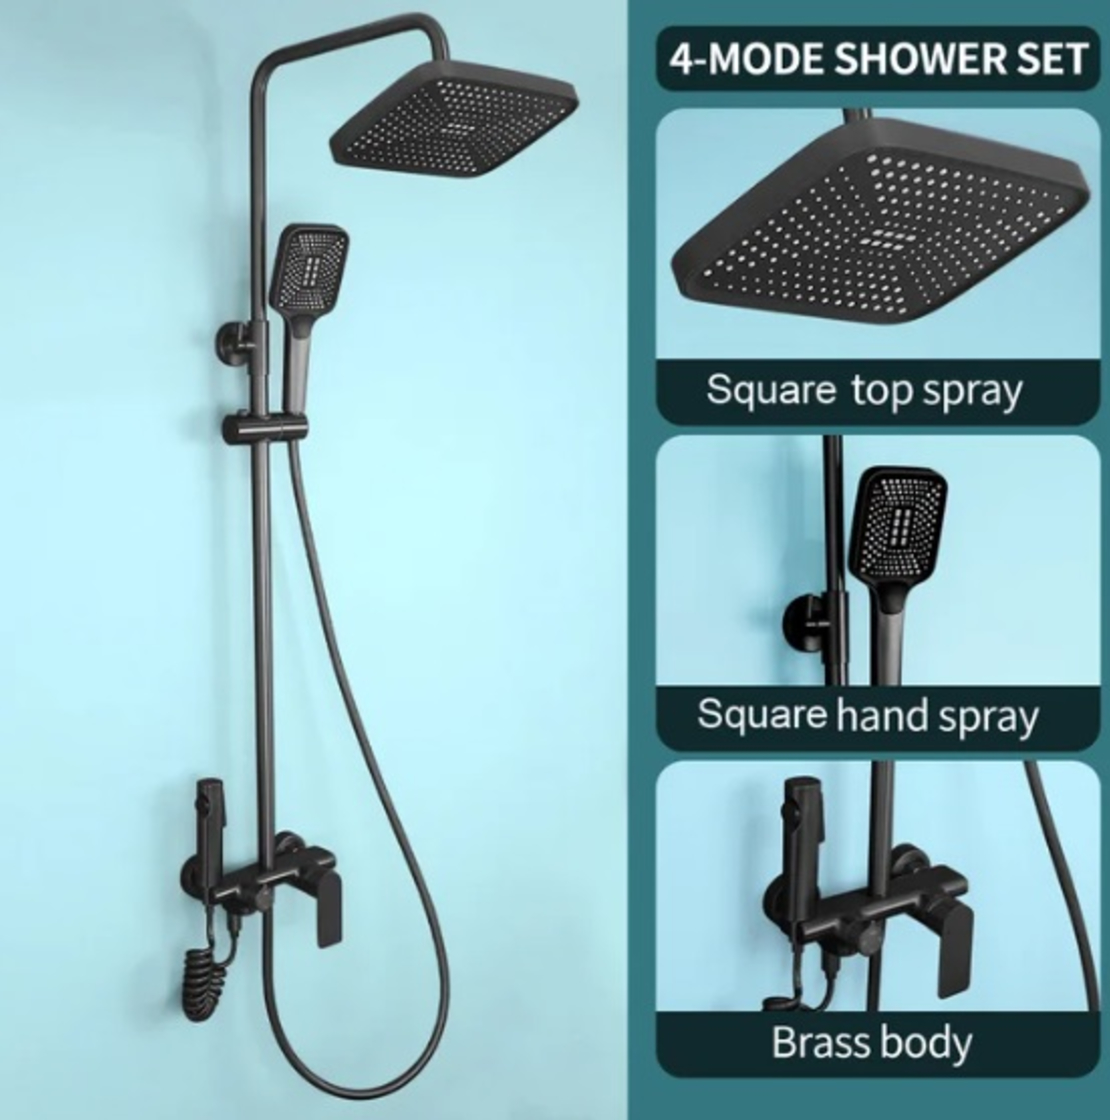 Луксозна мулти душ система с елегантен смесител VISION 003- Инокс,Графит или Черен, ROBOT SHOWER SET